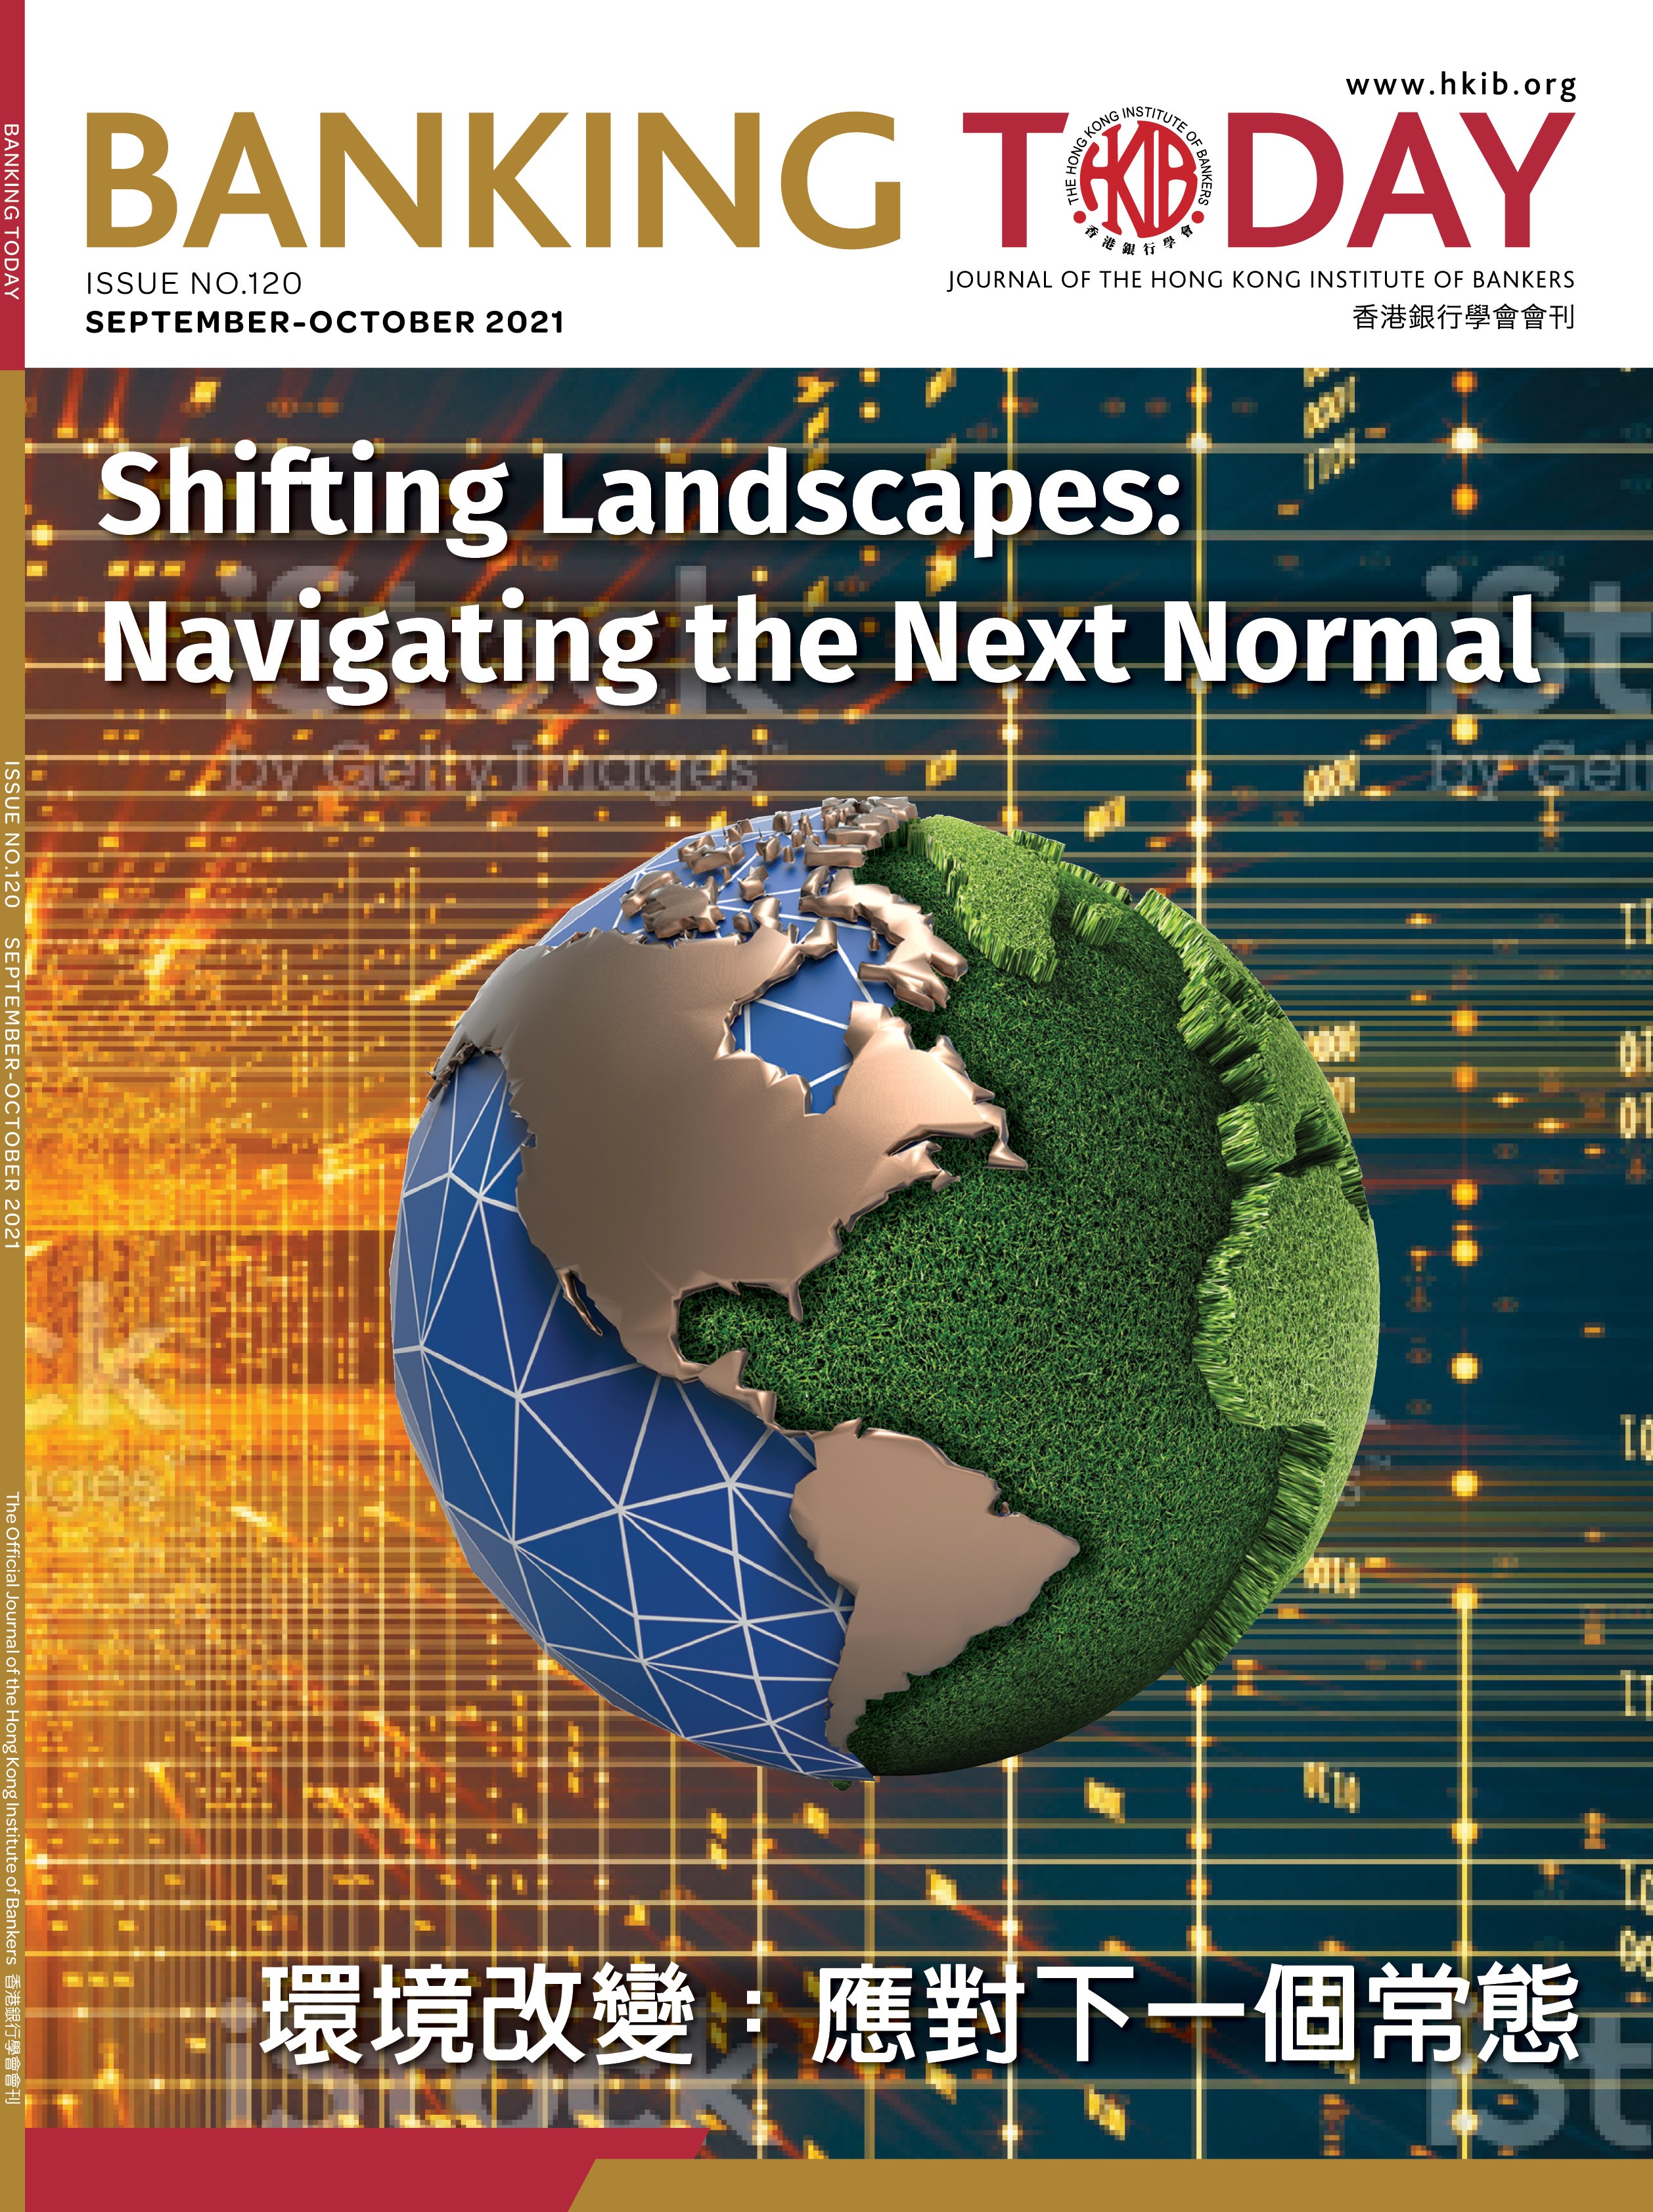 Shifting Landscapes: Navigating the Next Normal